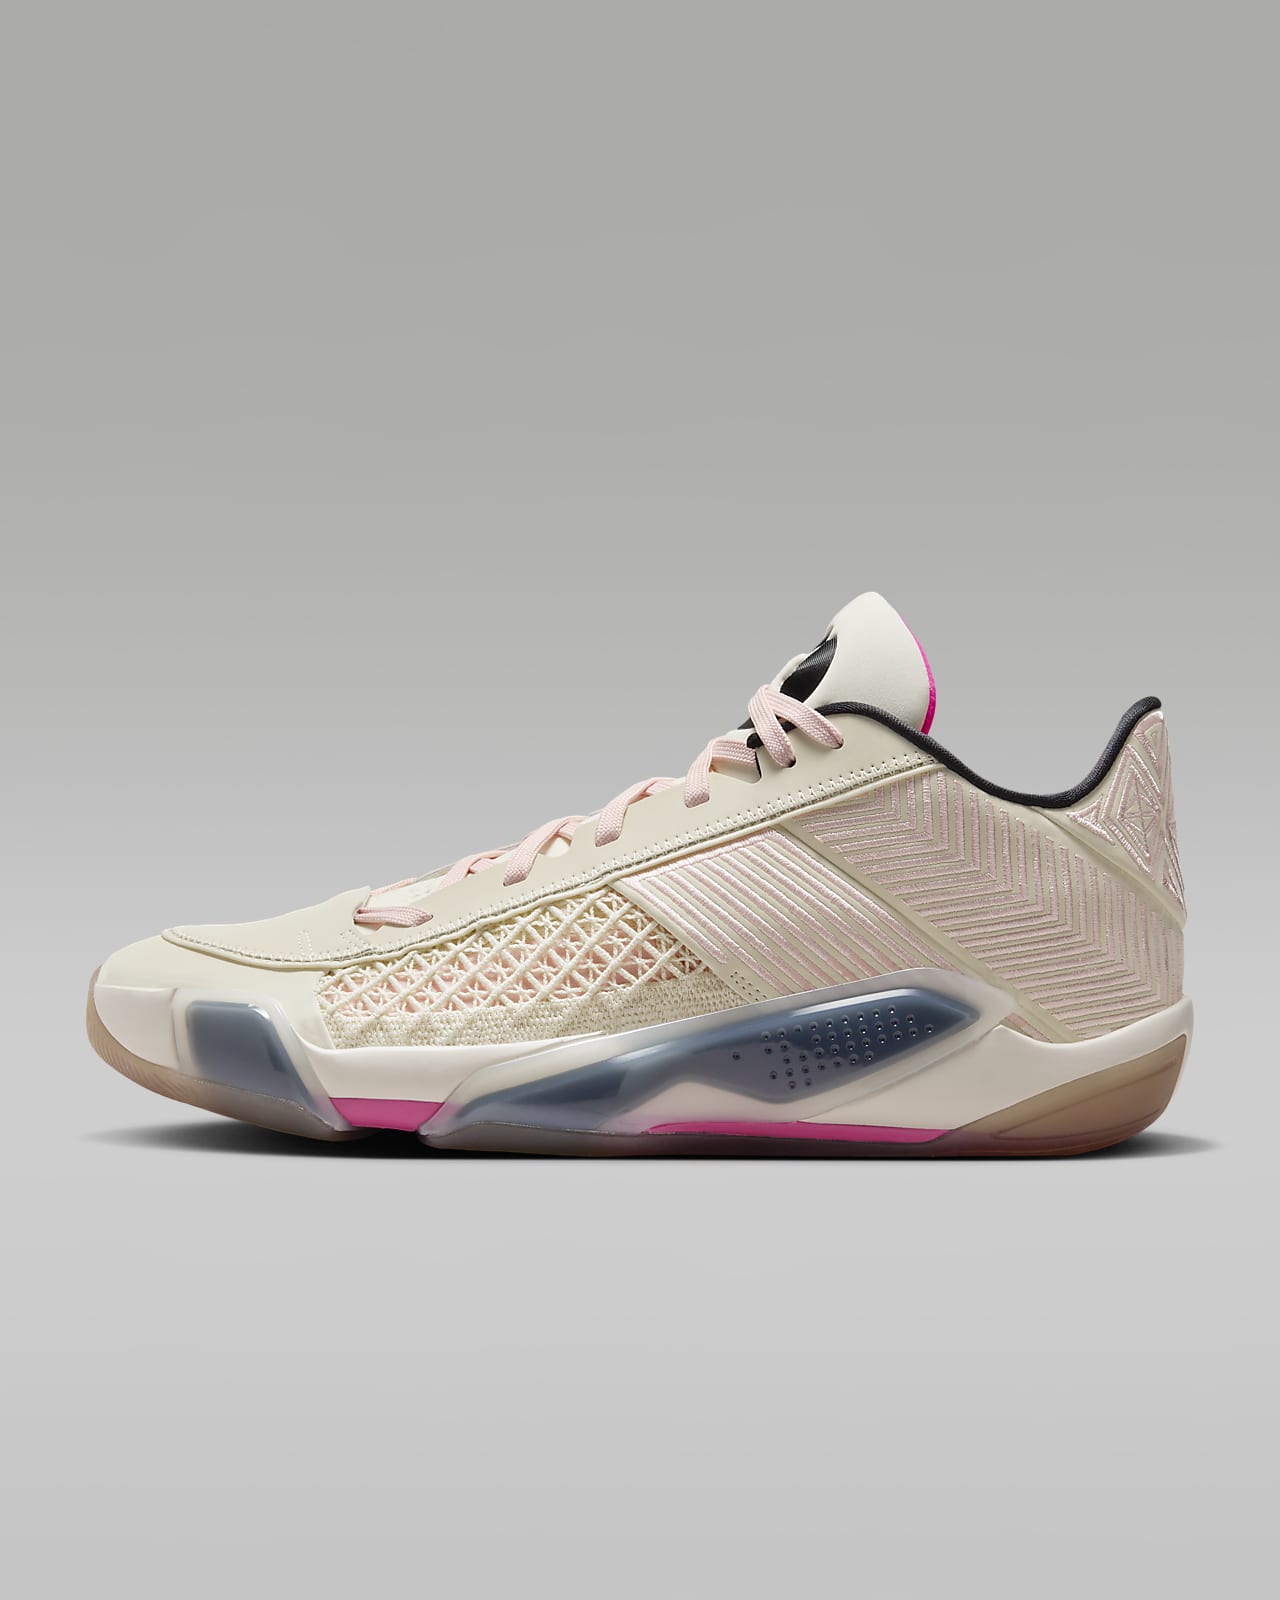 Air Jordan XXXVIII Low Basketball Shoes